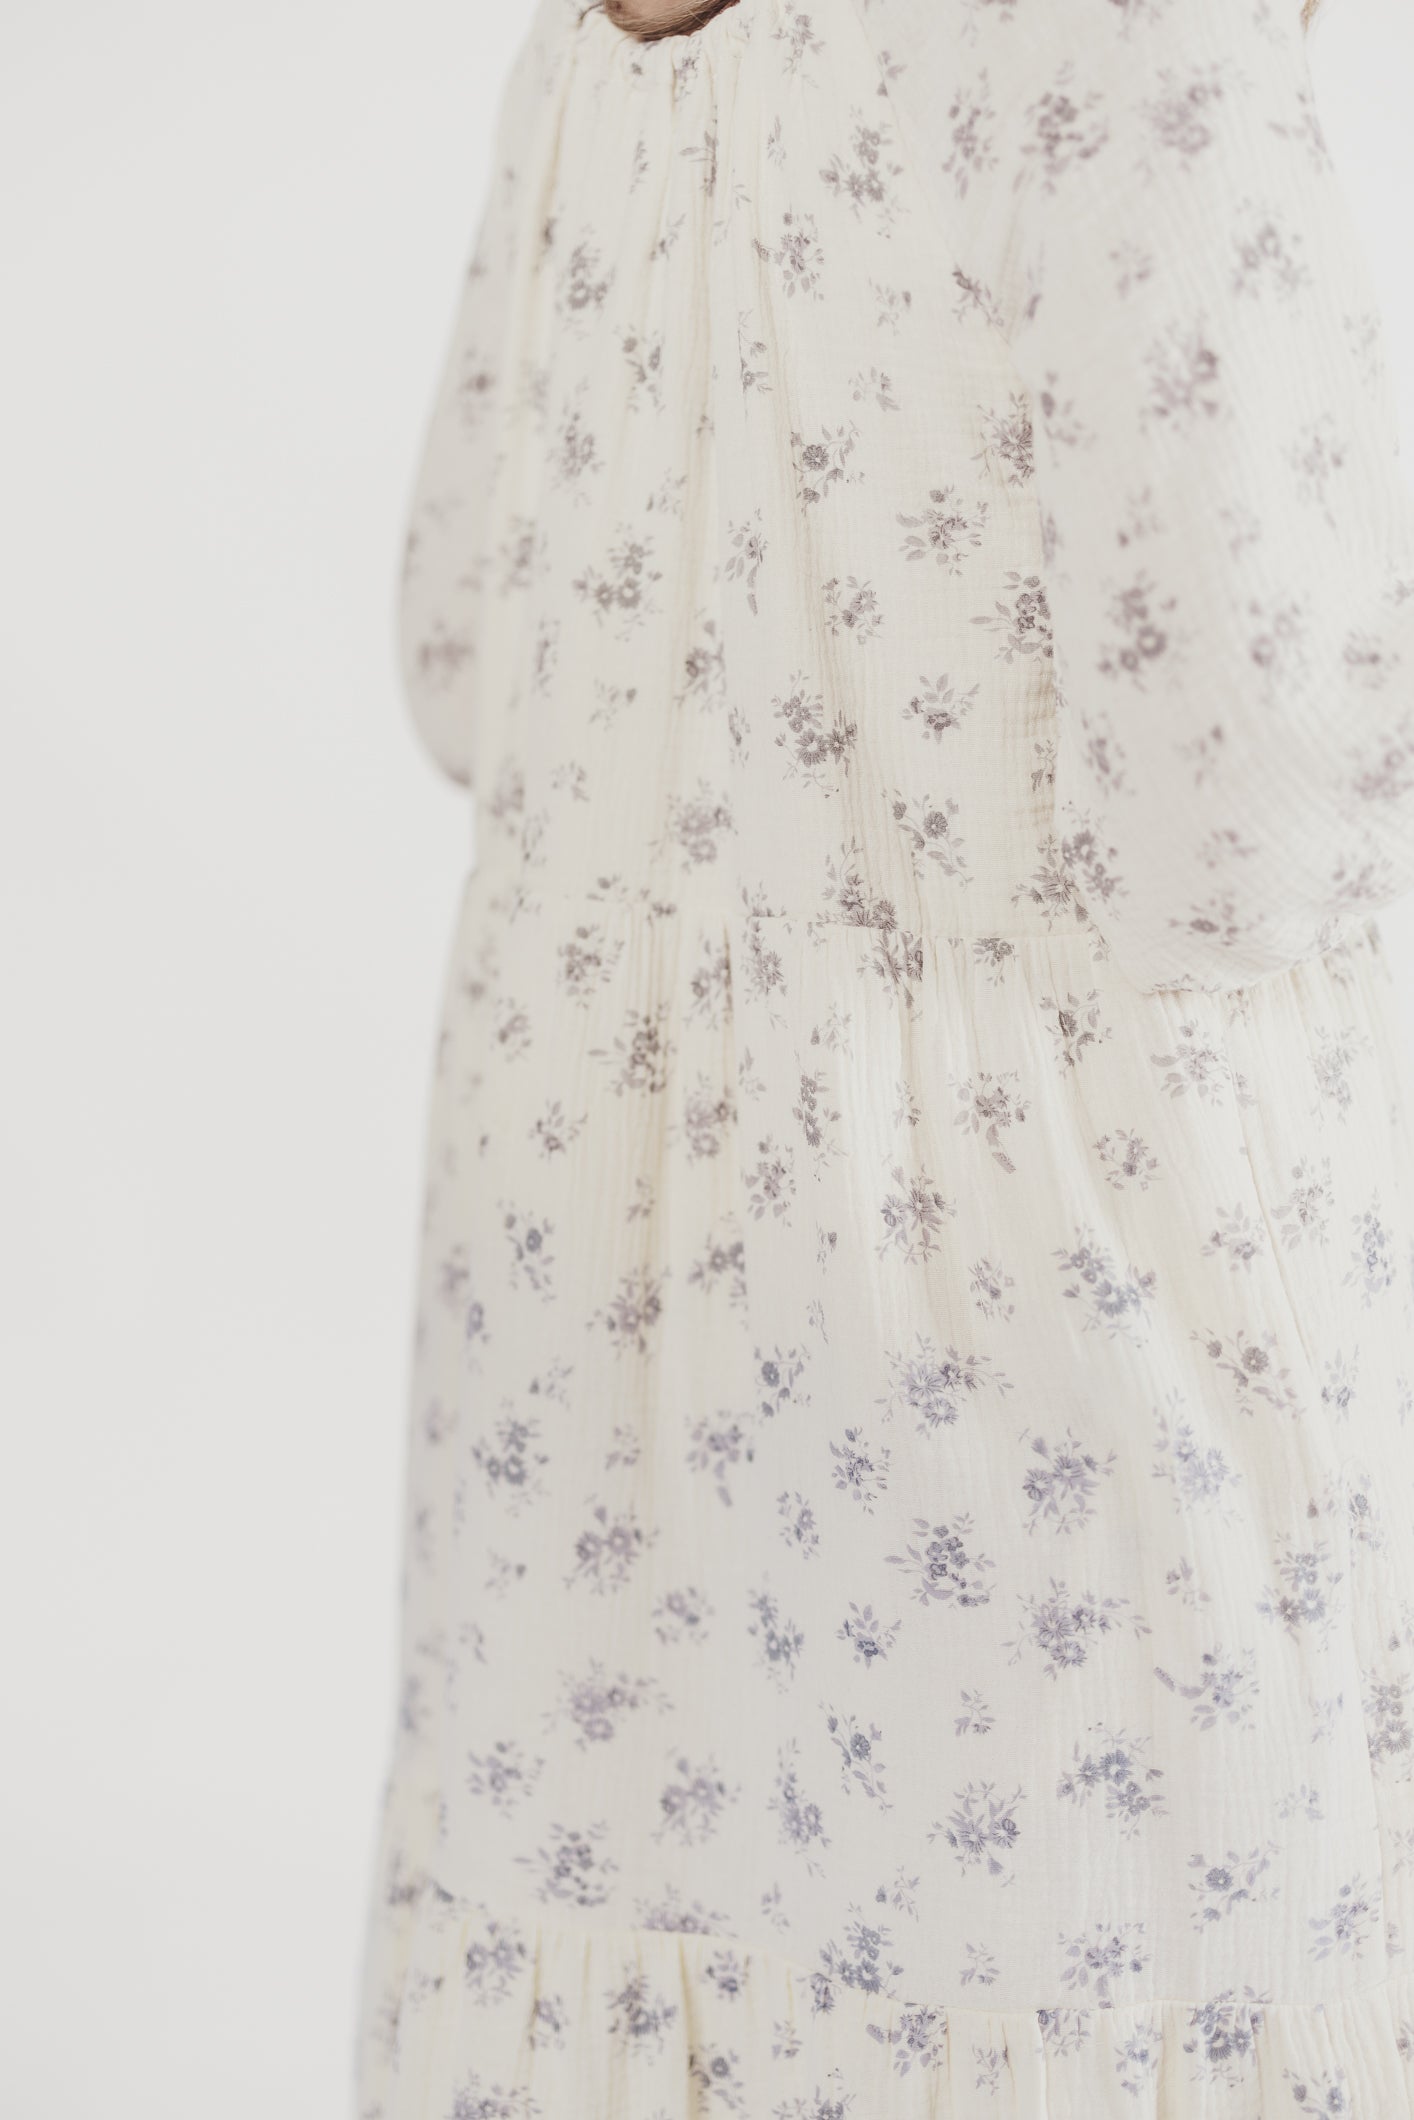 Jenna Tiered Gauze Midi Dress in Ivory Floral - Bump Friendly - Inclusive Sizing (S-3X)